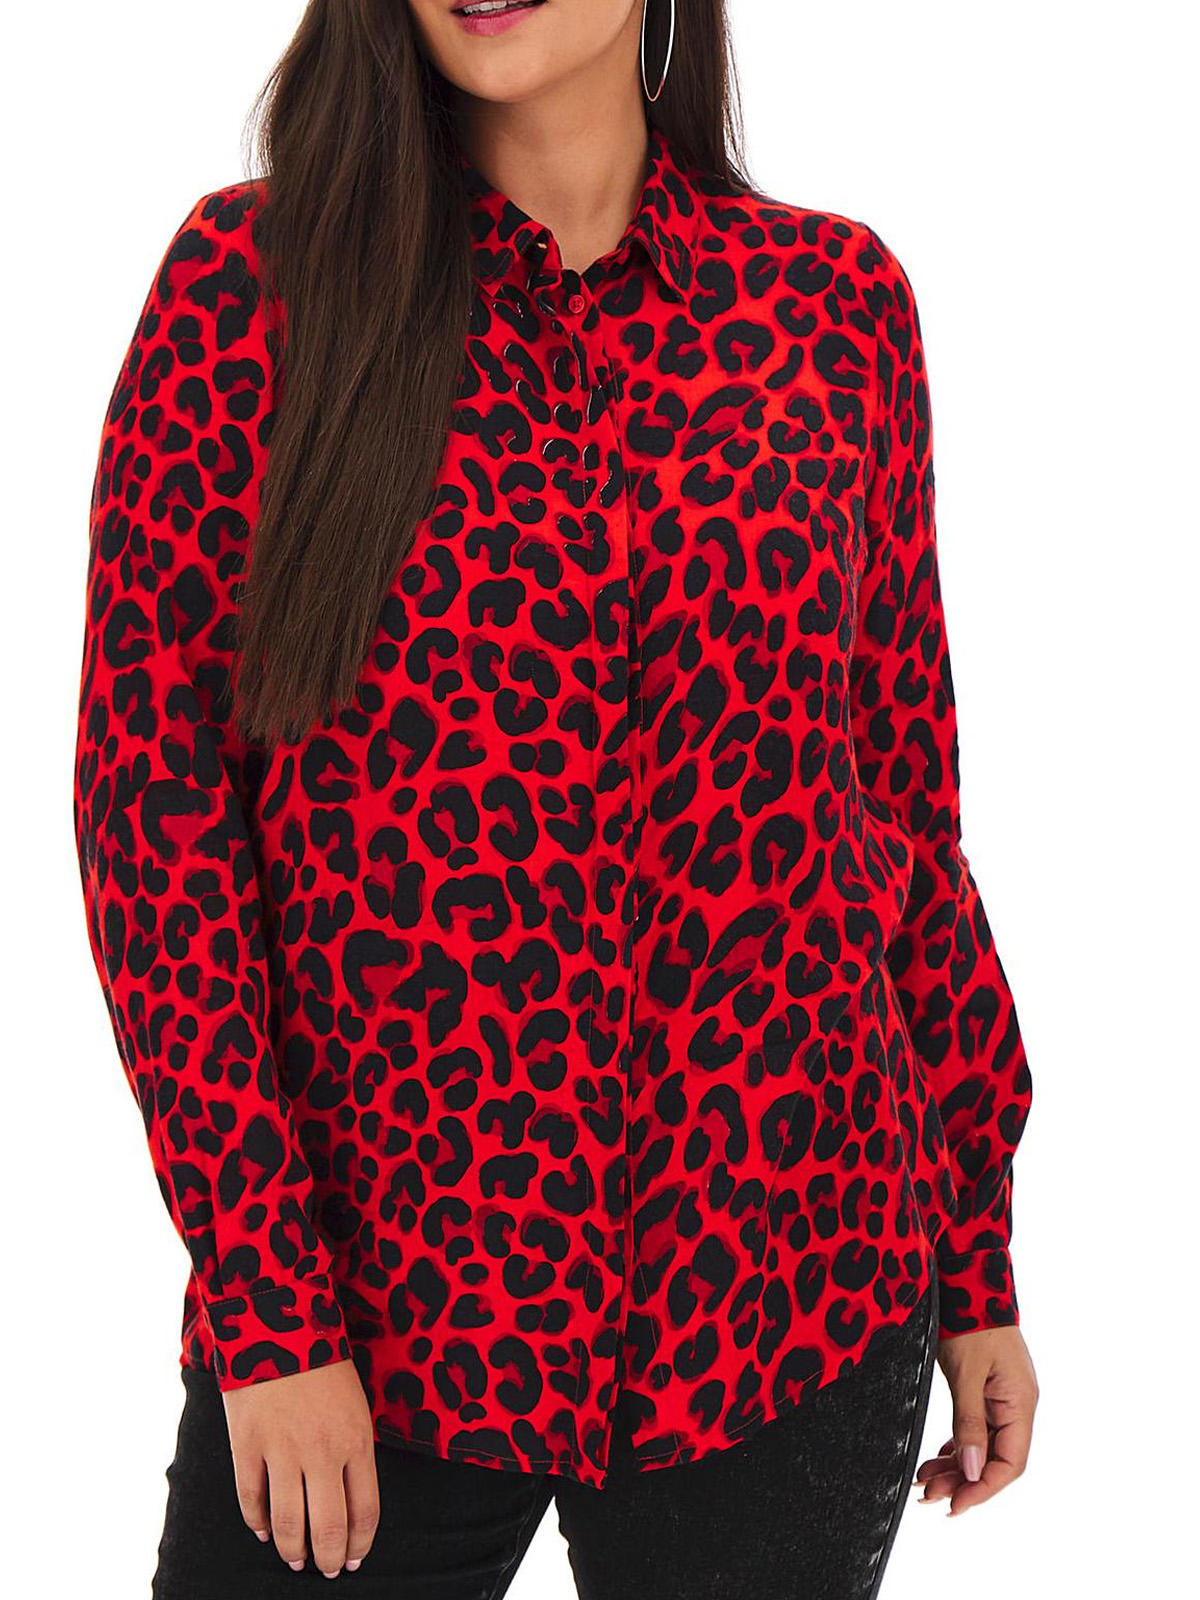 Capsule - - Capsule RED Leopard Print Dipped Hem Shirt - Plus Size 26 to 28